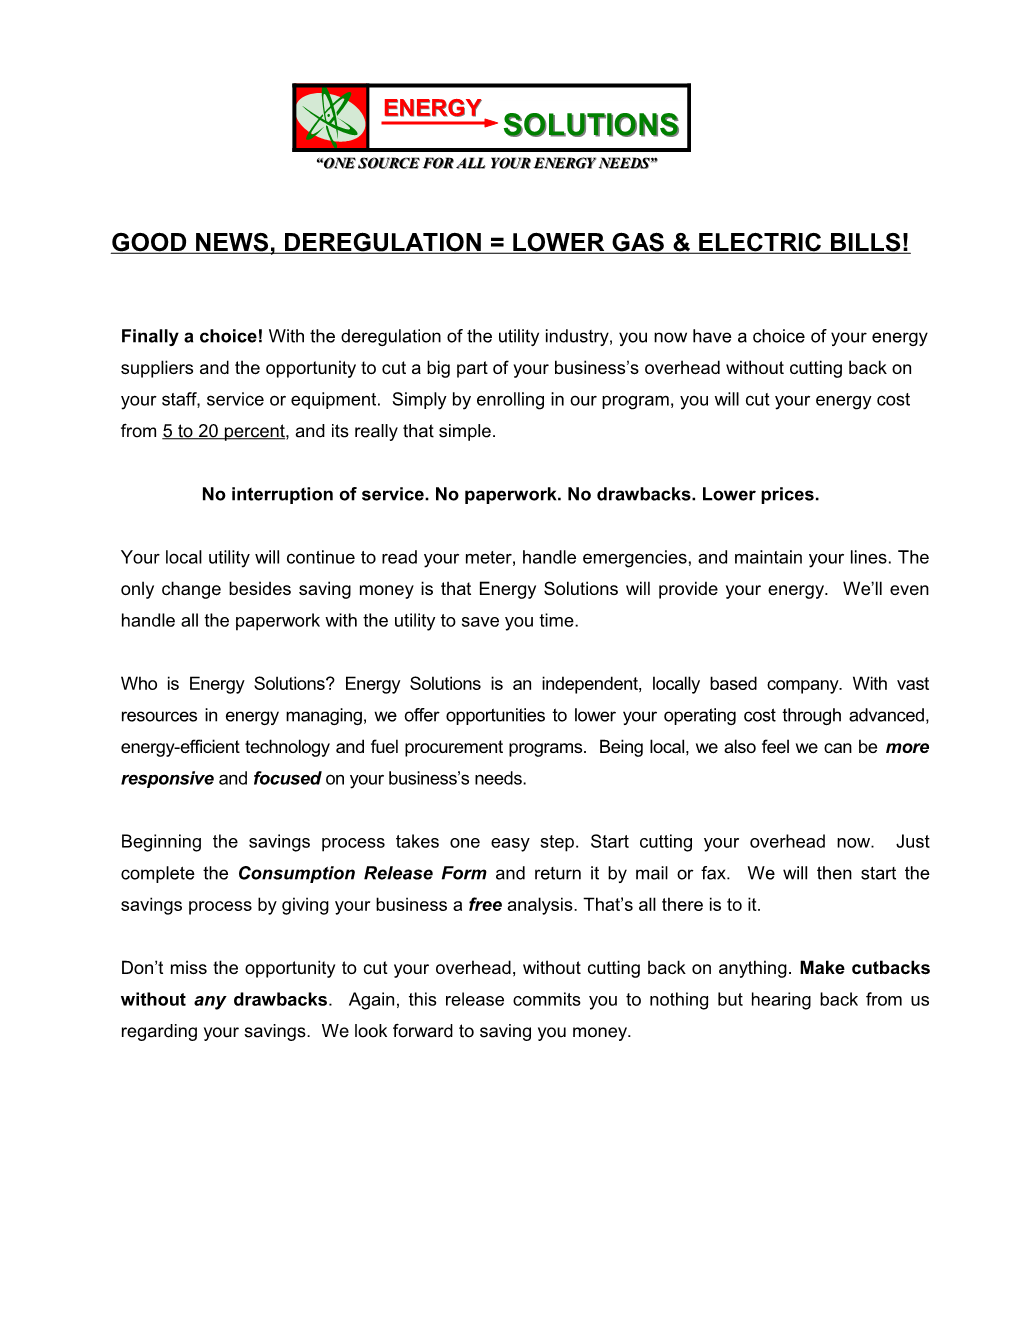 Good News, Deregulation = Lower Gas & Electric Bills!